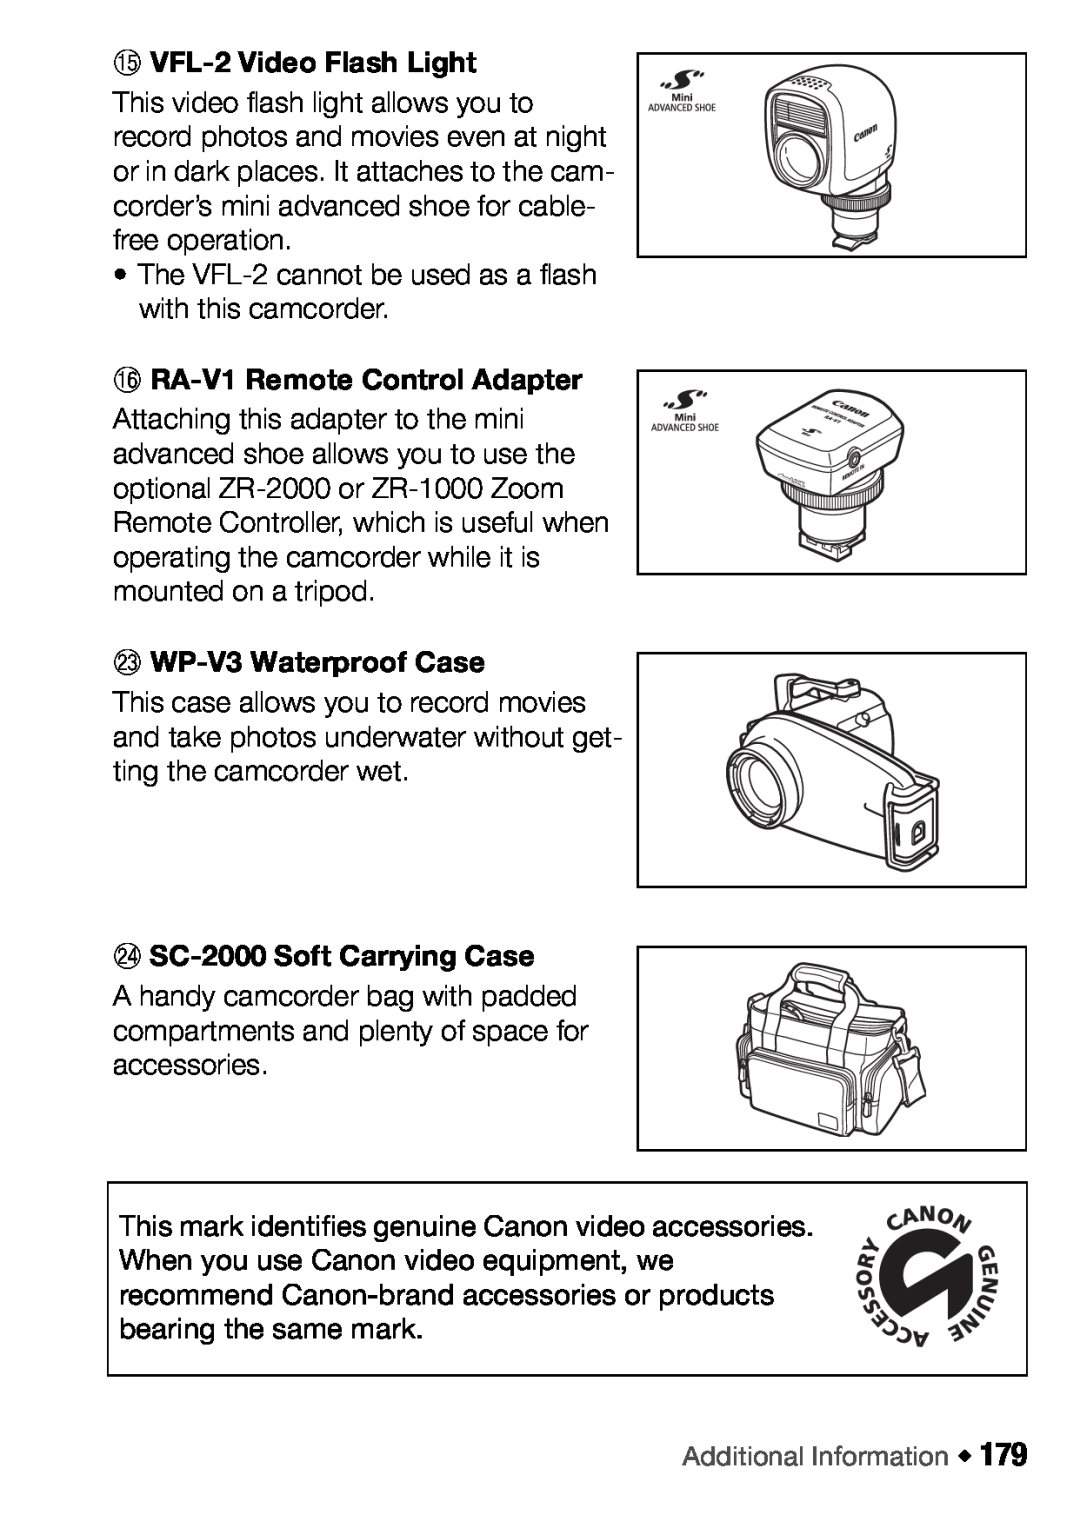 Canon HFM46, HFM406 instruction manual gA VFL-2 Video Flash Light, hA RA-V1 Remote Control Adapter, dS WP-V3 Waterproof Case 